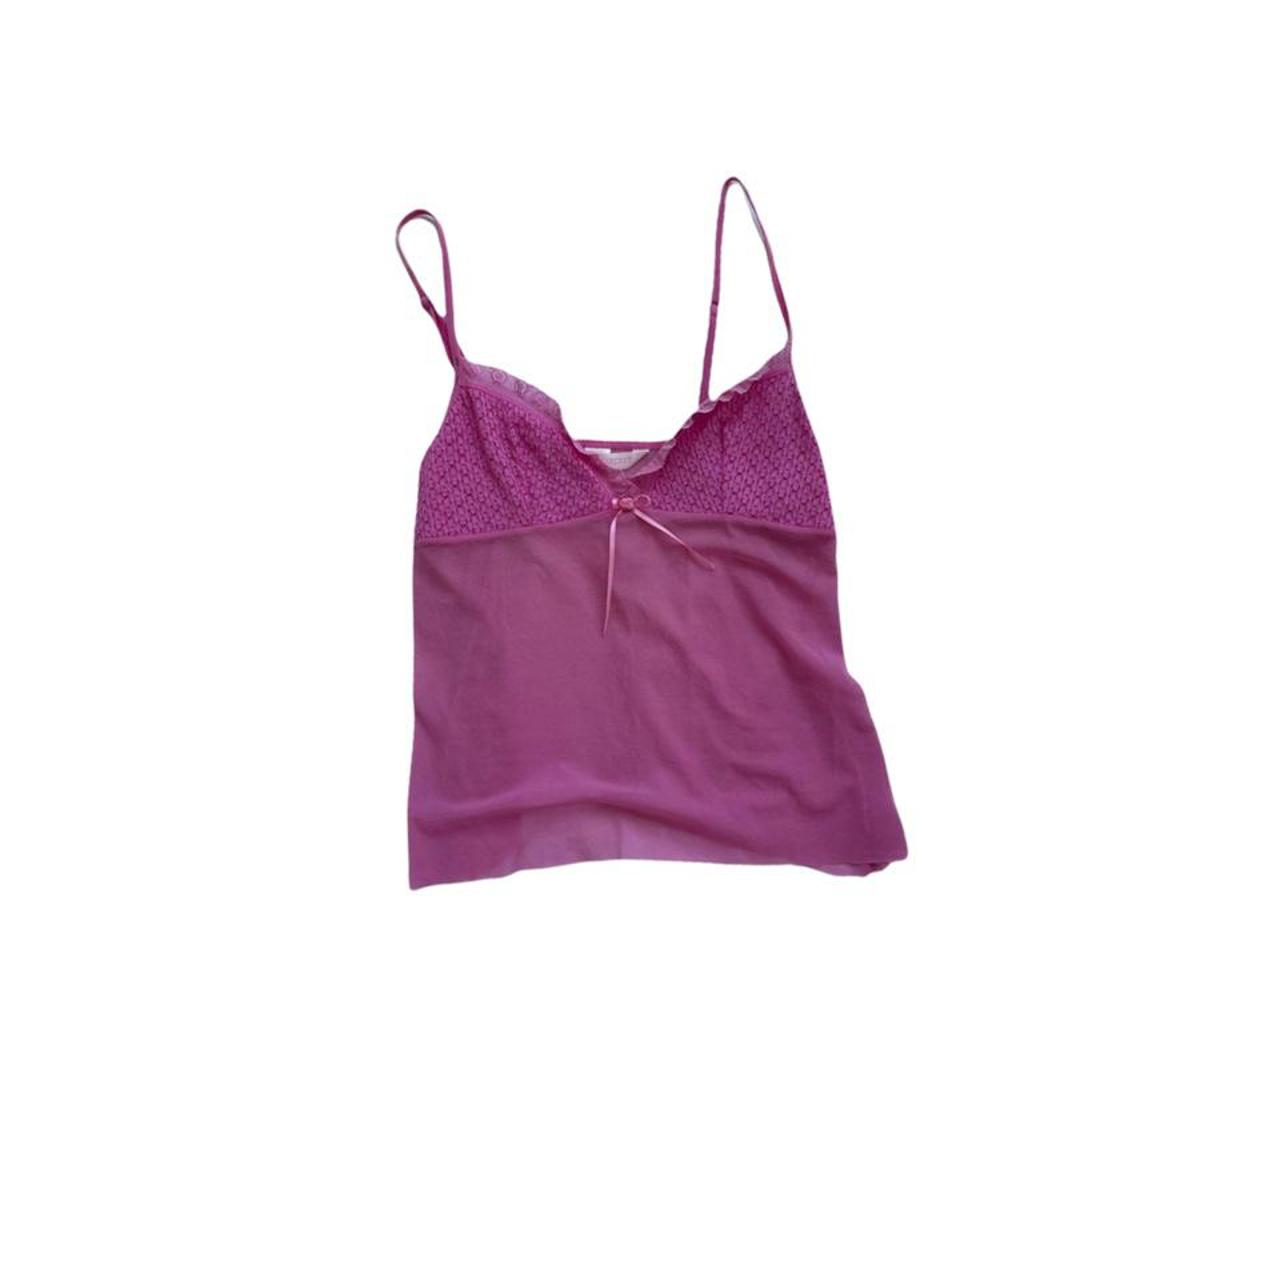 Product Image 1 - Victoria’s Secret pink mesh cami